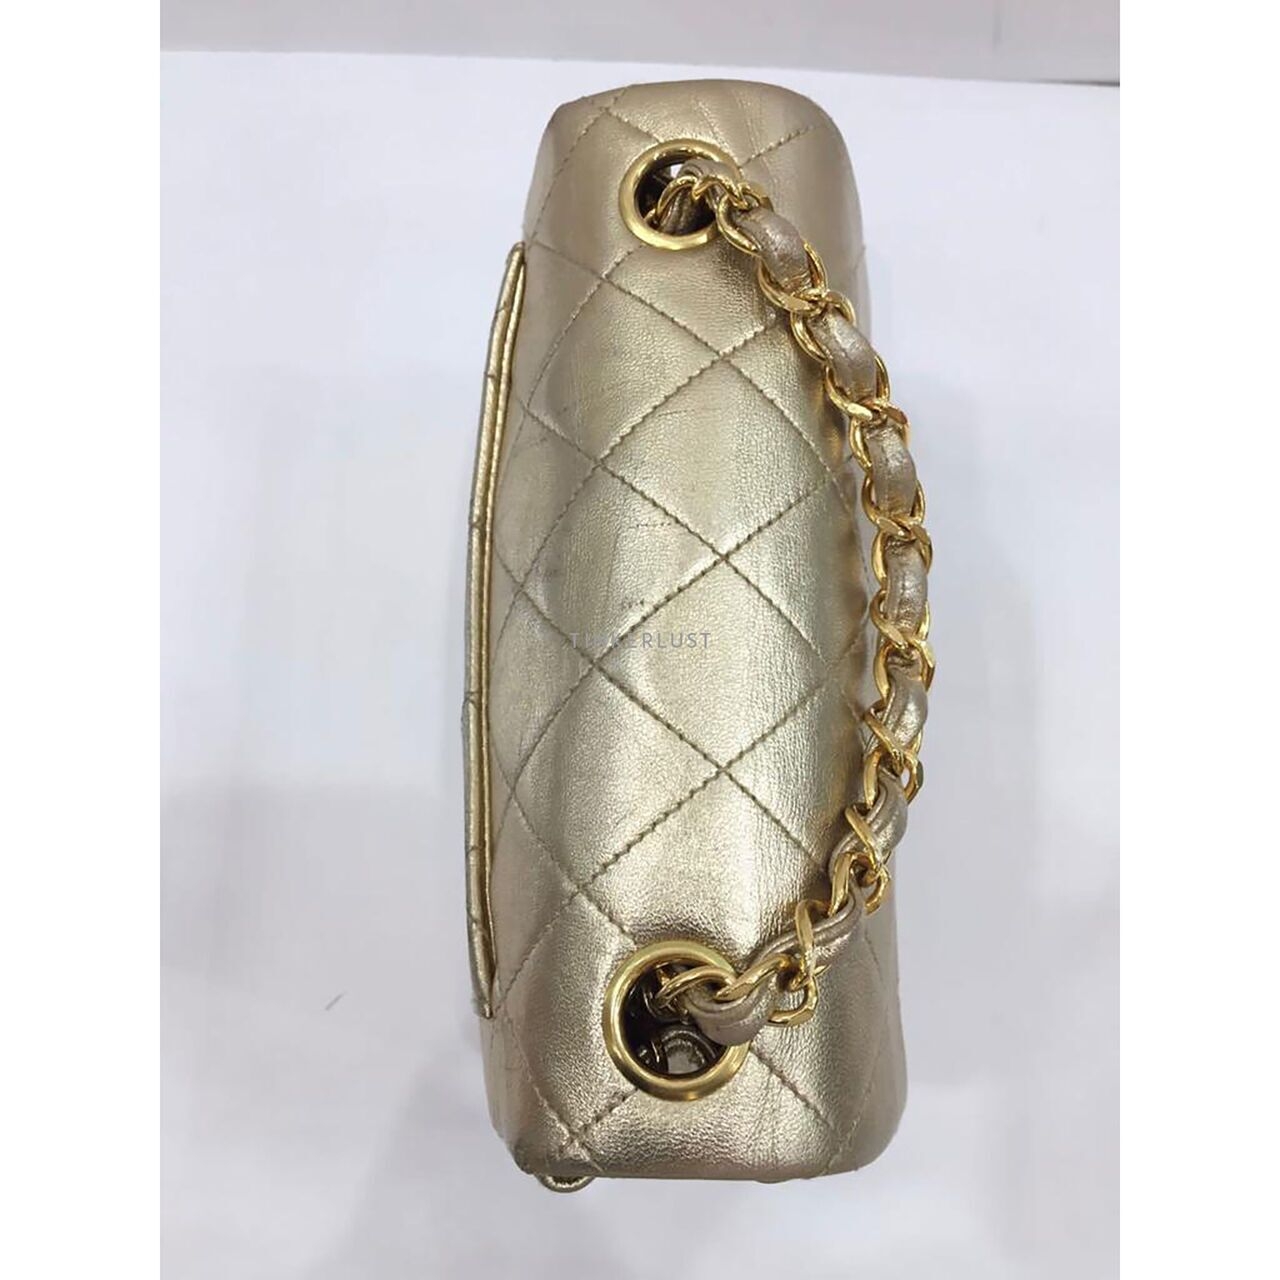 Chanel Mini Square Vintage Gold Lambskin GHW #2 Sling Bag